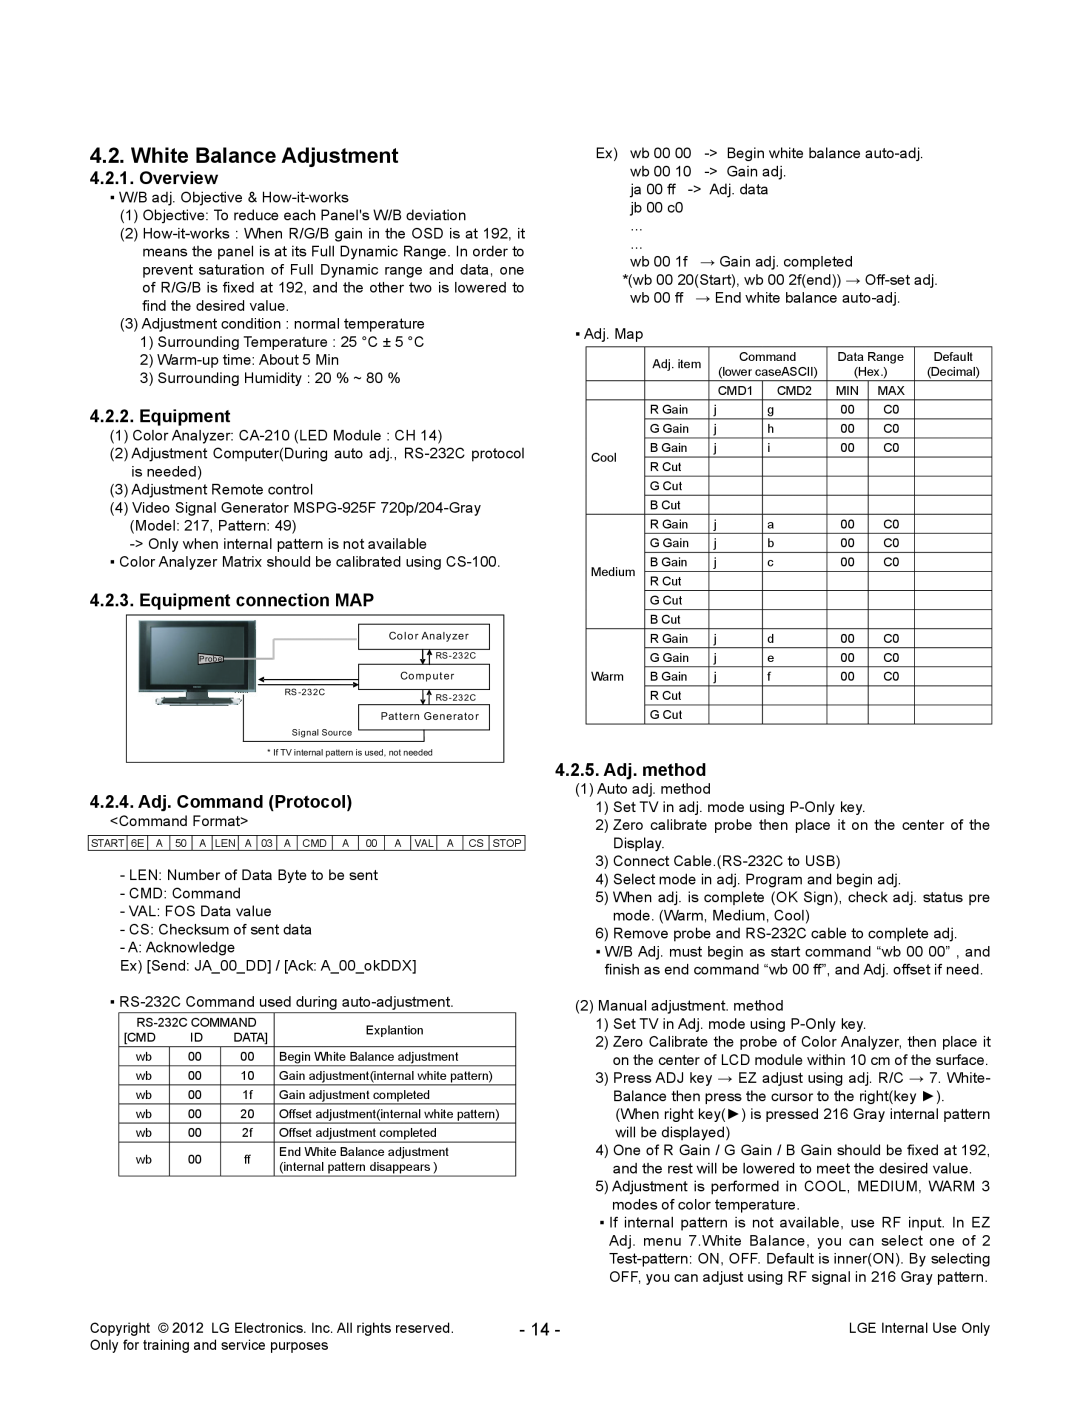 LG Electronics 32LM640S/640T-ZA White Balance Adjustment, Overview, Equipment connection MAP, Adj. Command Protocol 